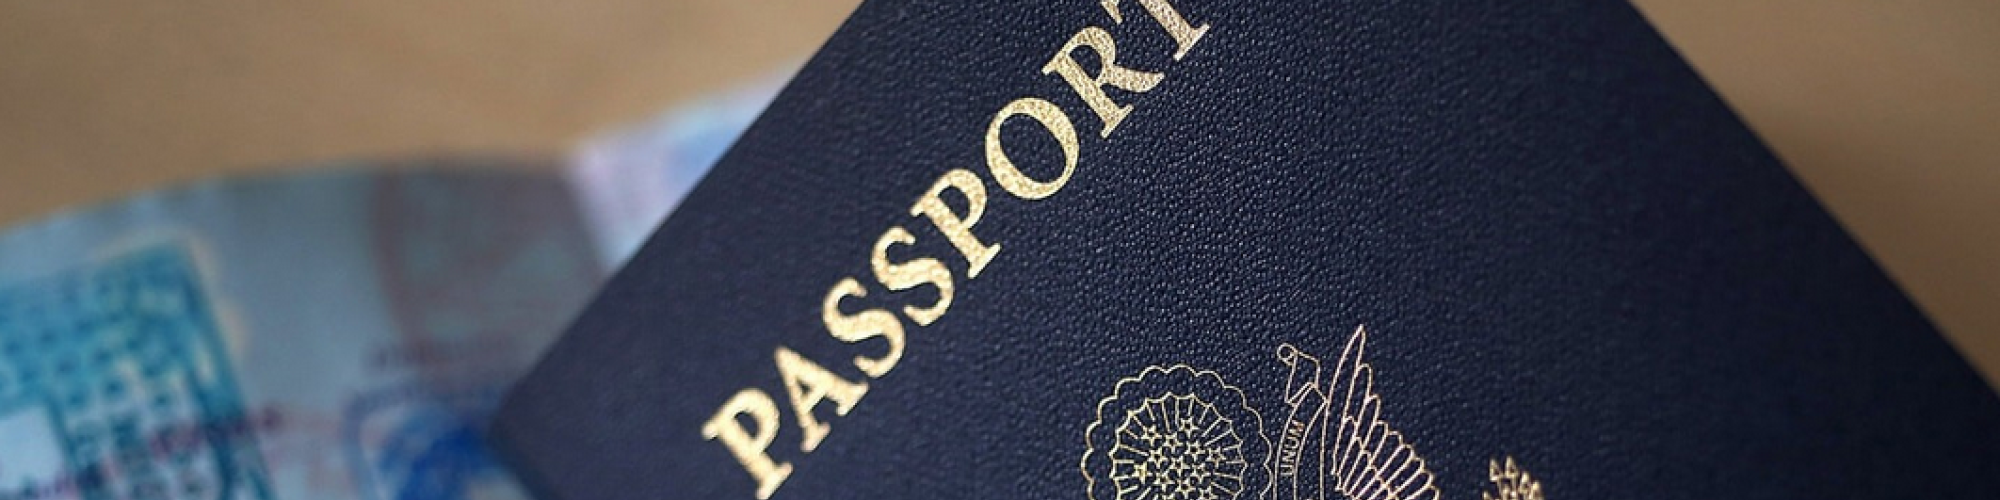 Passports and visas - Passport Renewal Office Denver Colorado